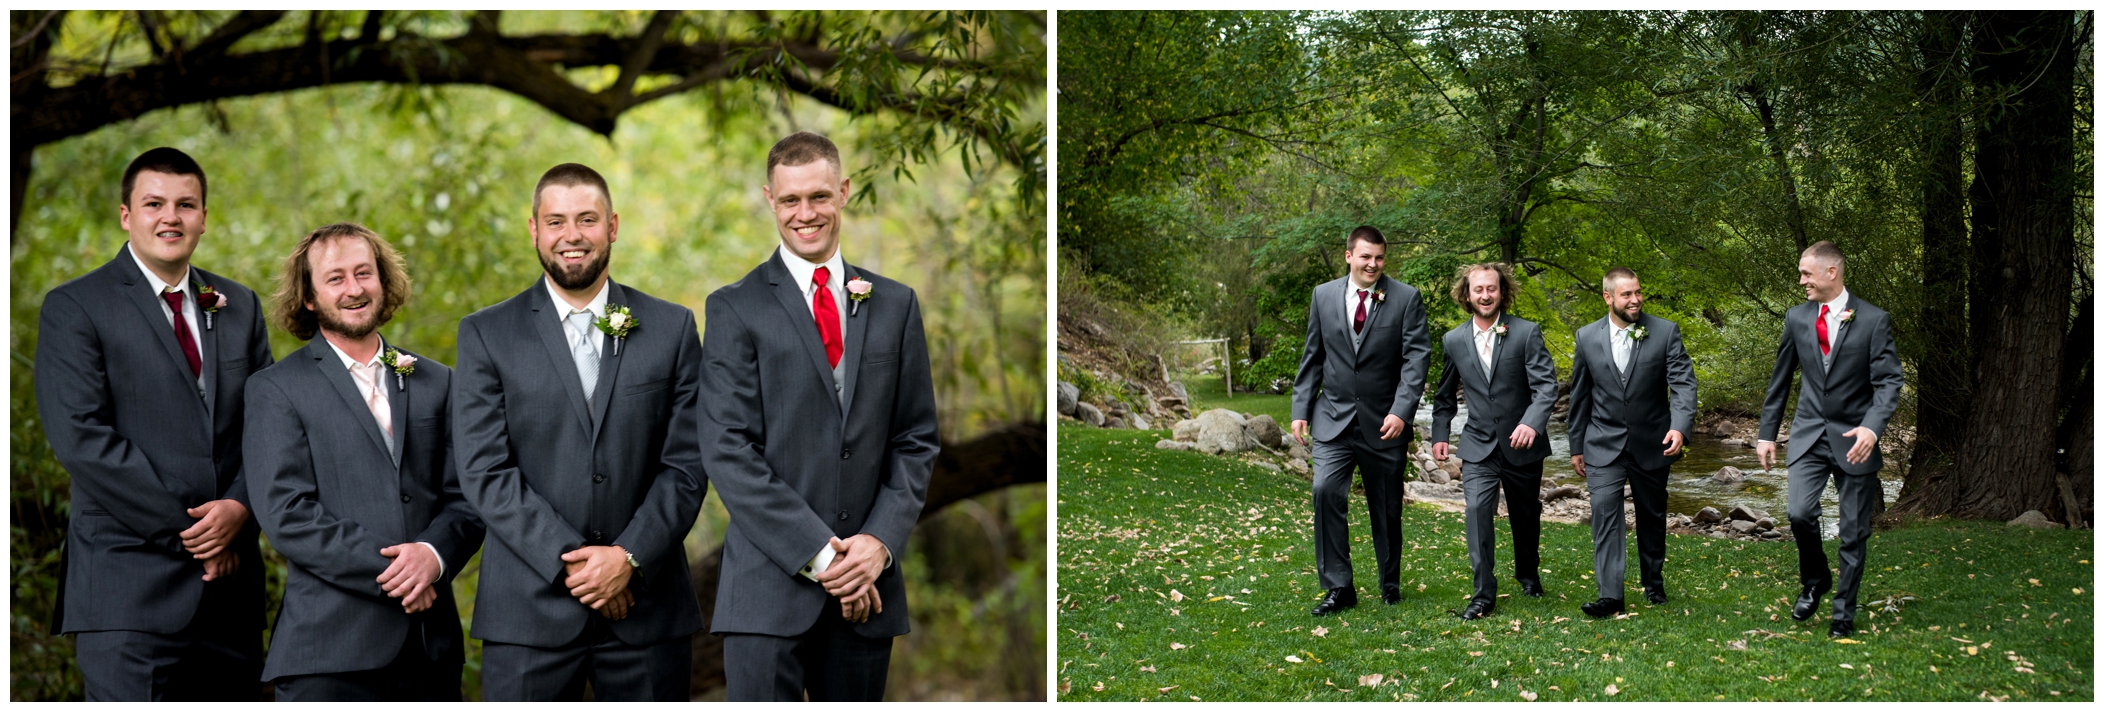 Boulder Creek wedgewood wedding photography of groomsmen in gray 